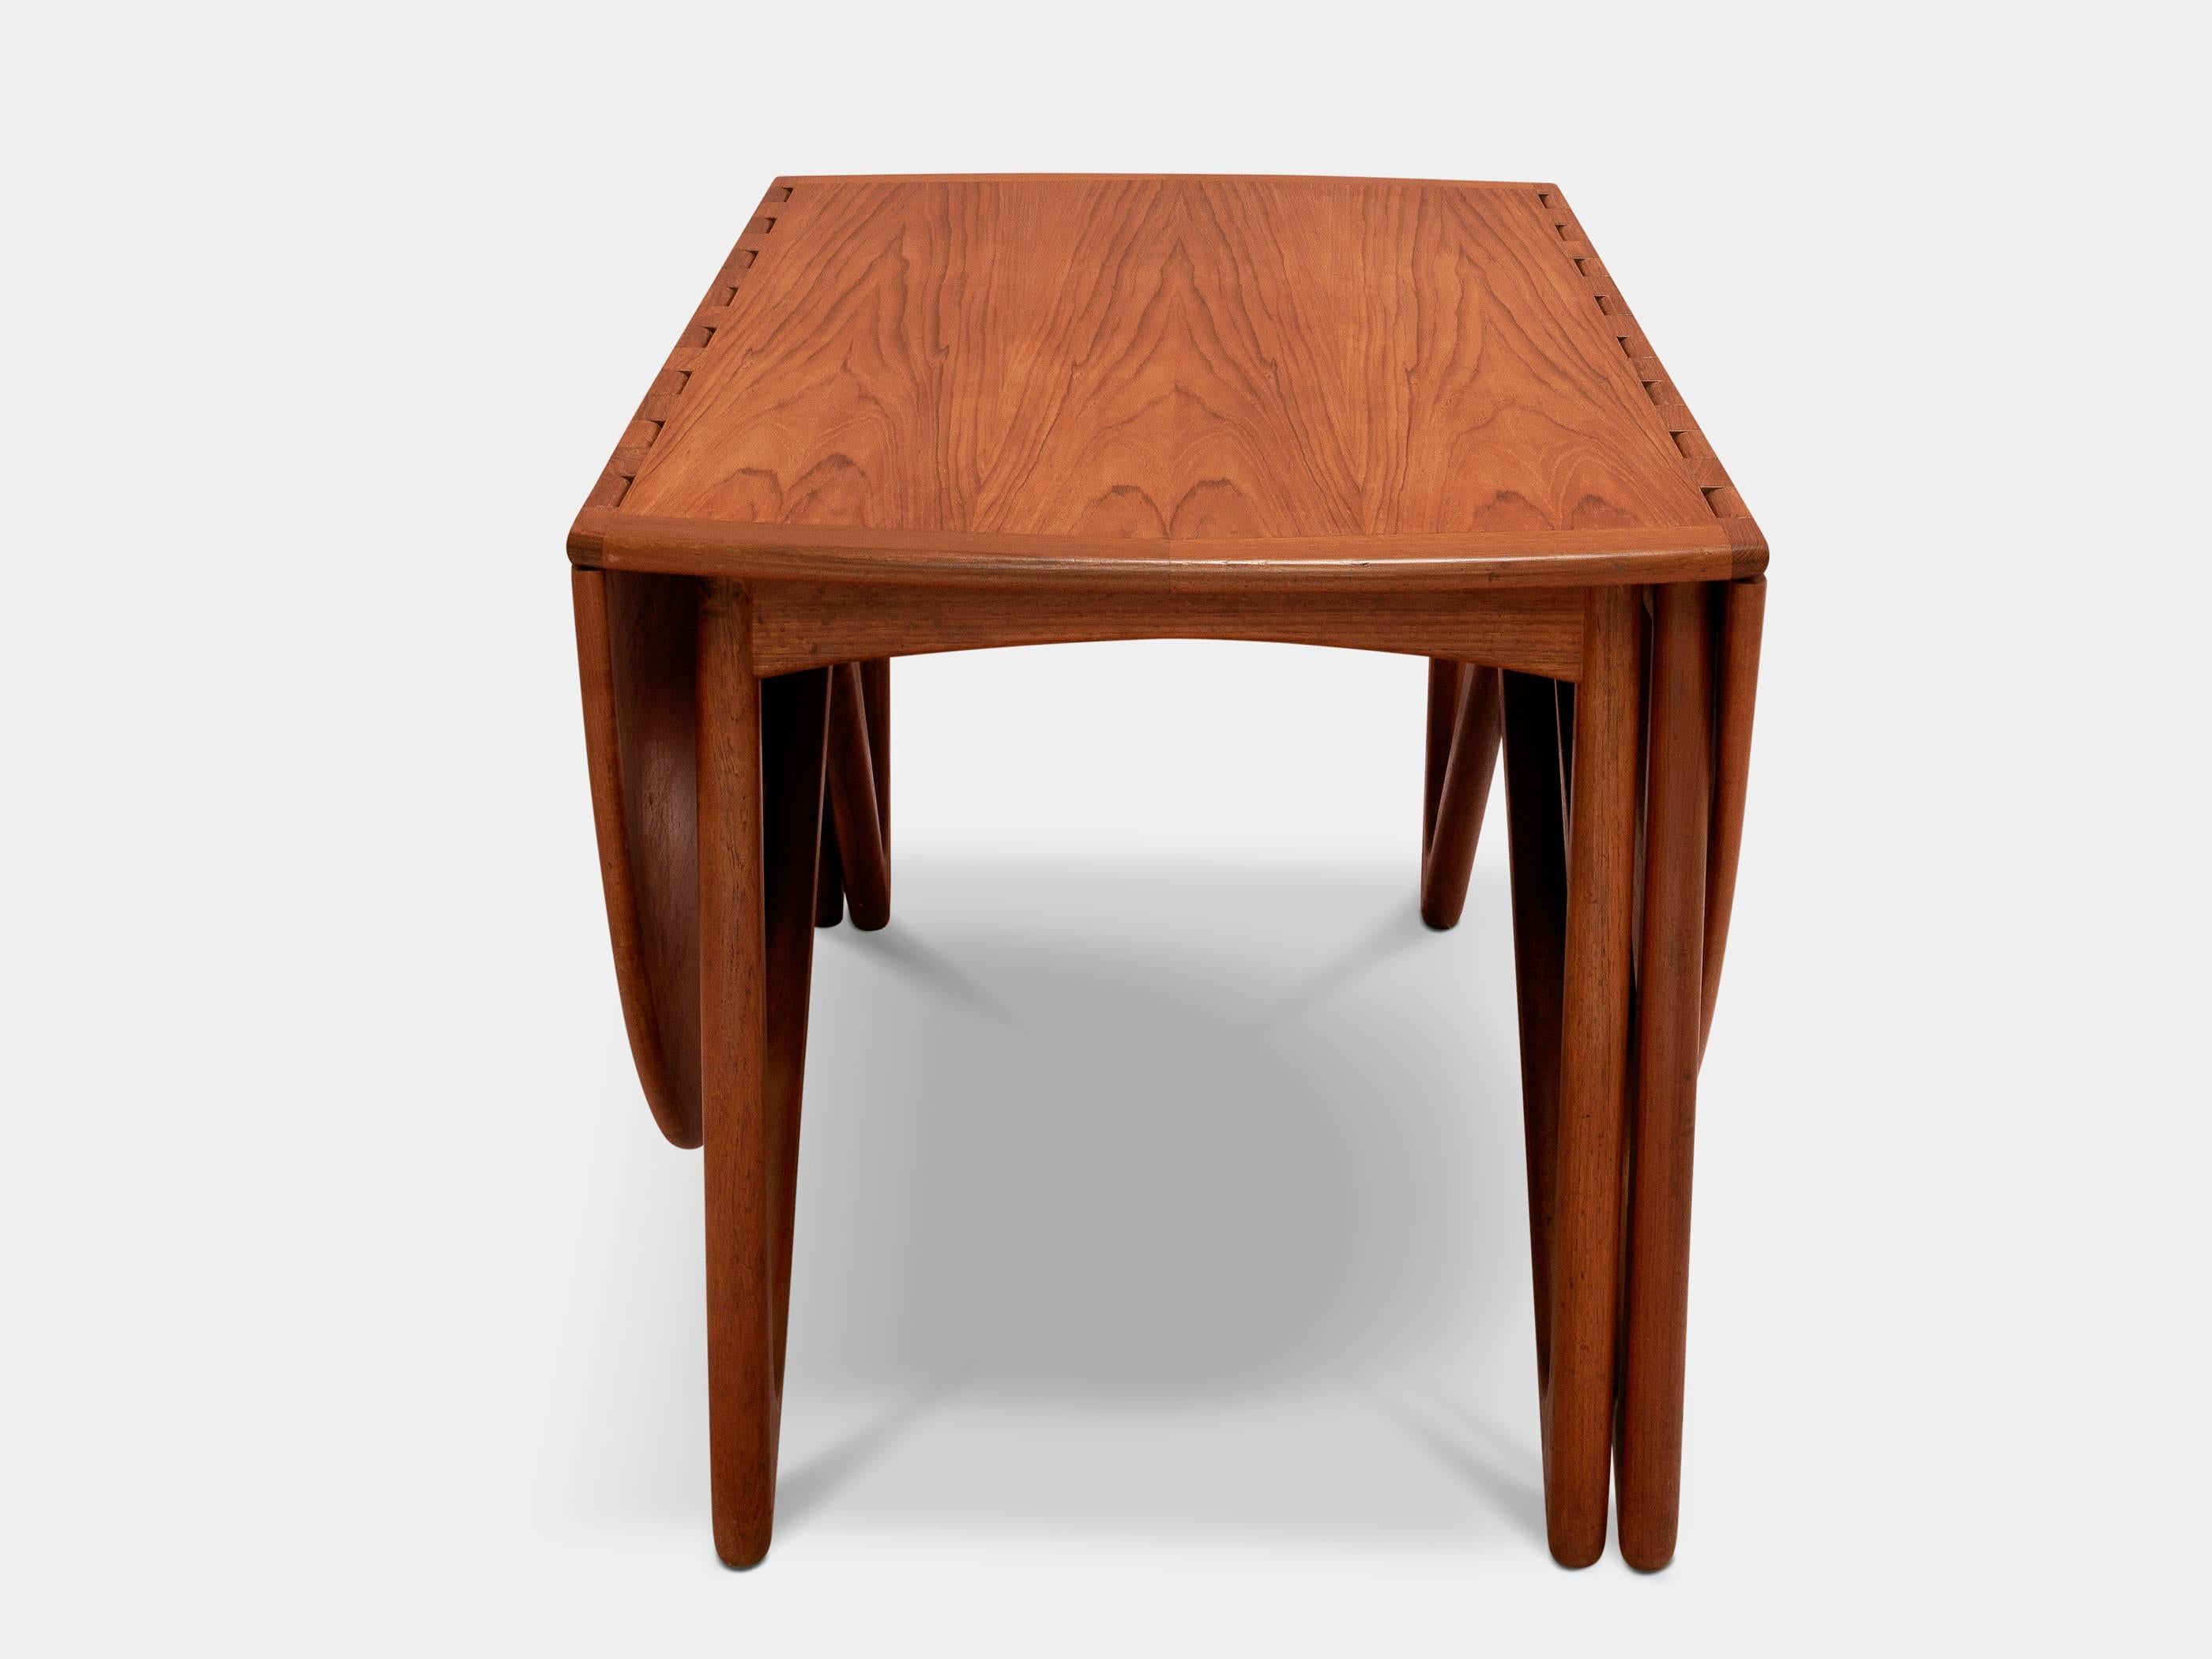 Scandinavian Modern Gate-Leg Table by the danish designer Niels Kofoed For Sale